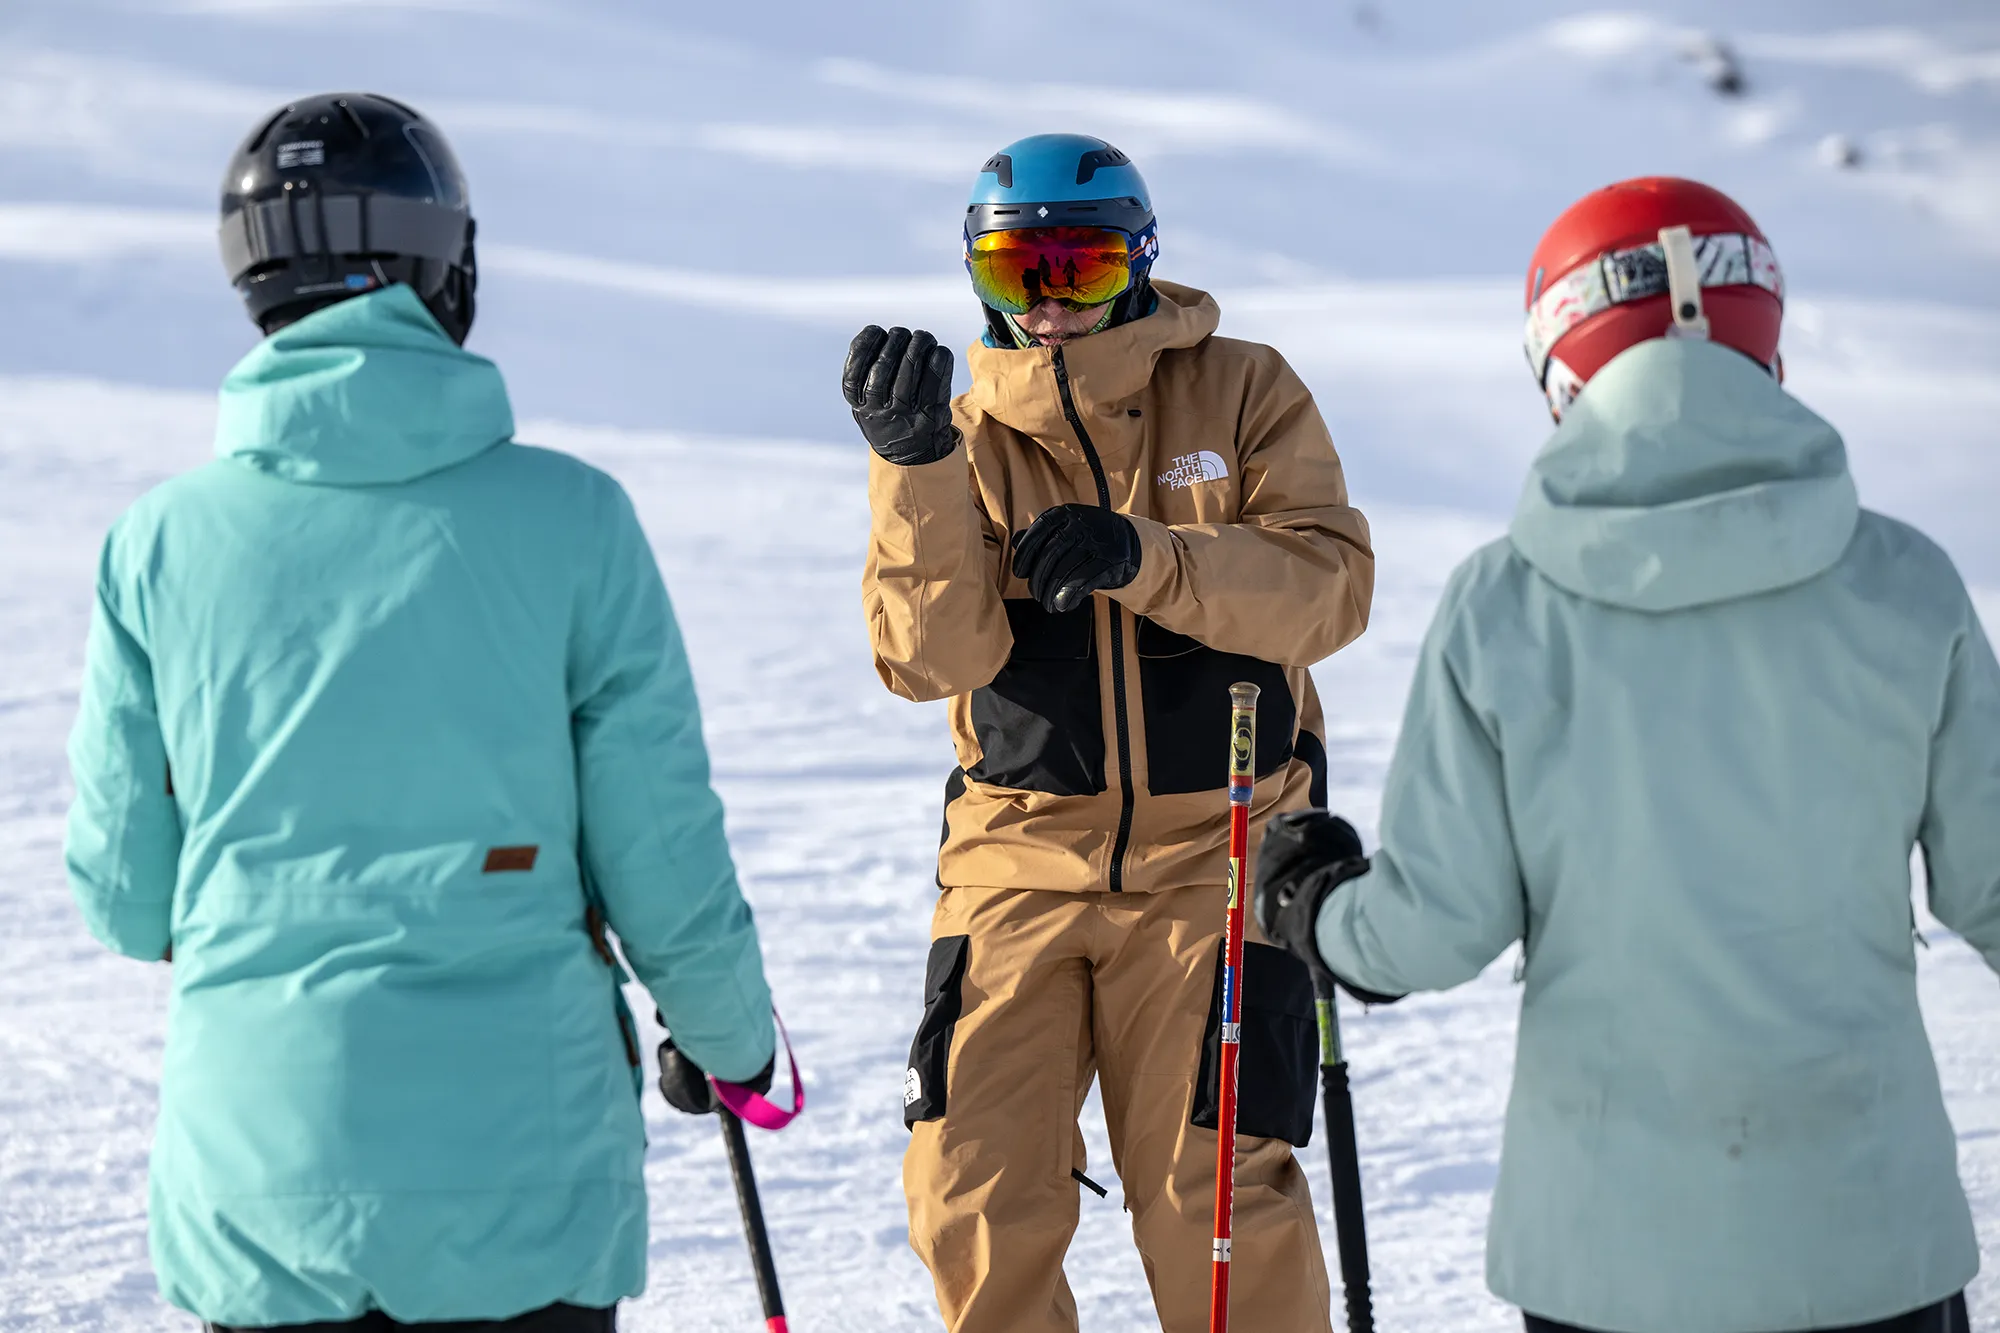 A Ski instructor giving feedback in a ski lesson